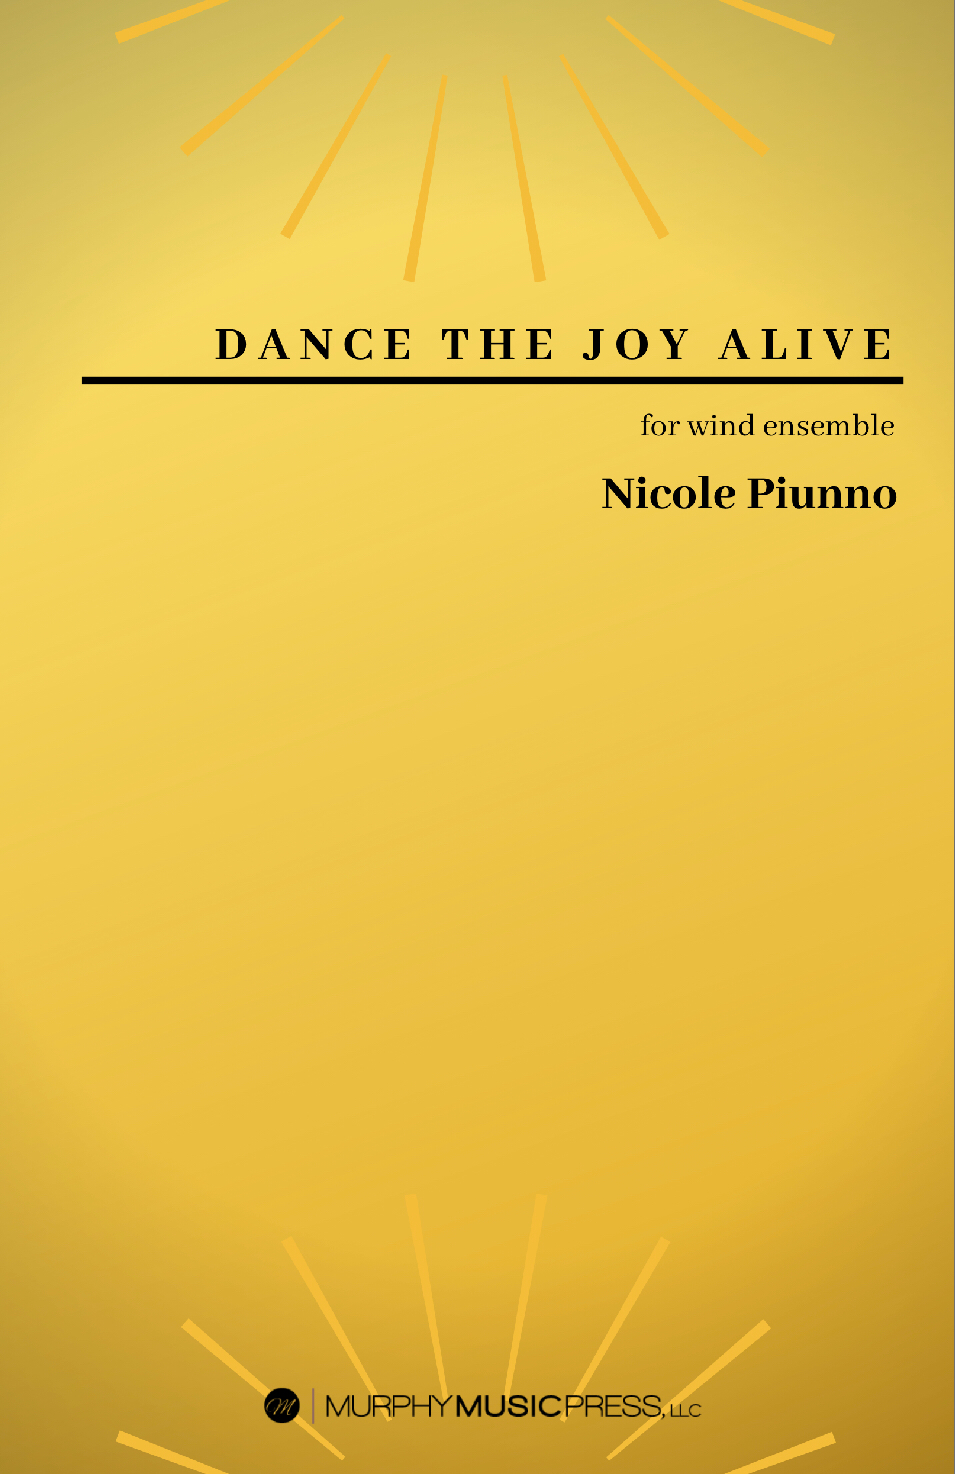 Dance The Joy Alive  by Nicole Piunno 